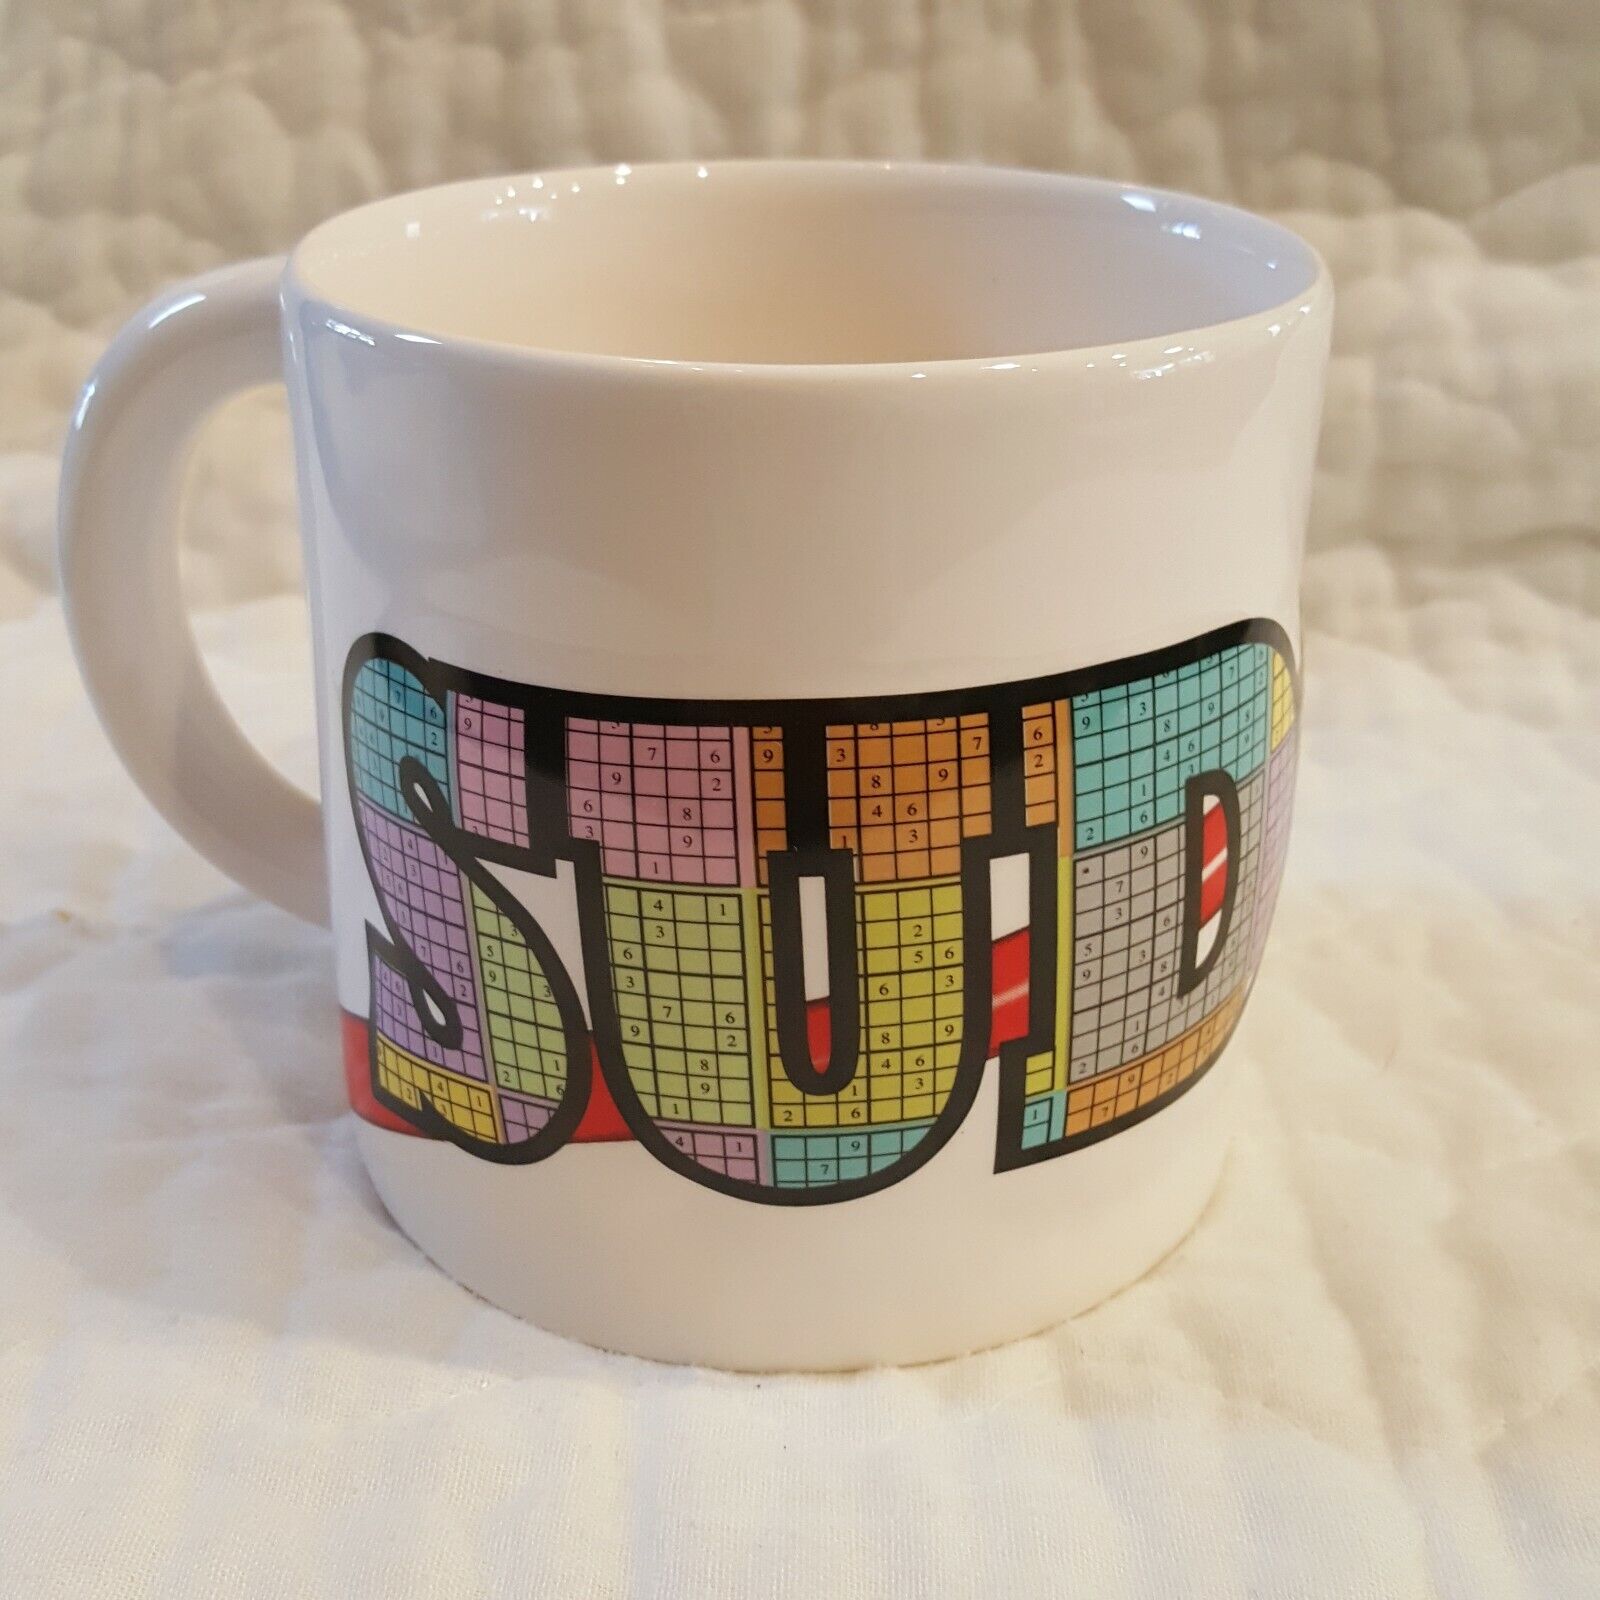 Sudoku Puzzle Coffee Mug Cup Colorful Appx 4.25 x 4.25 22oz 2006 Sherwood Brands